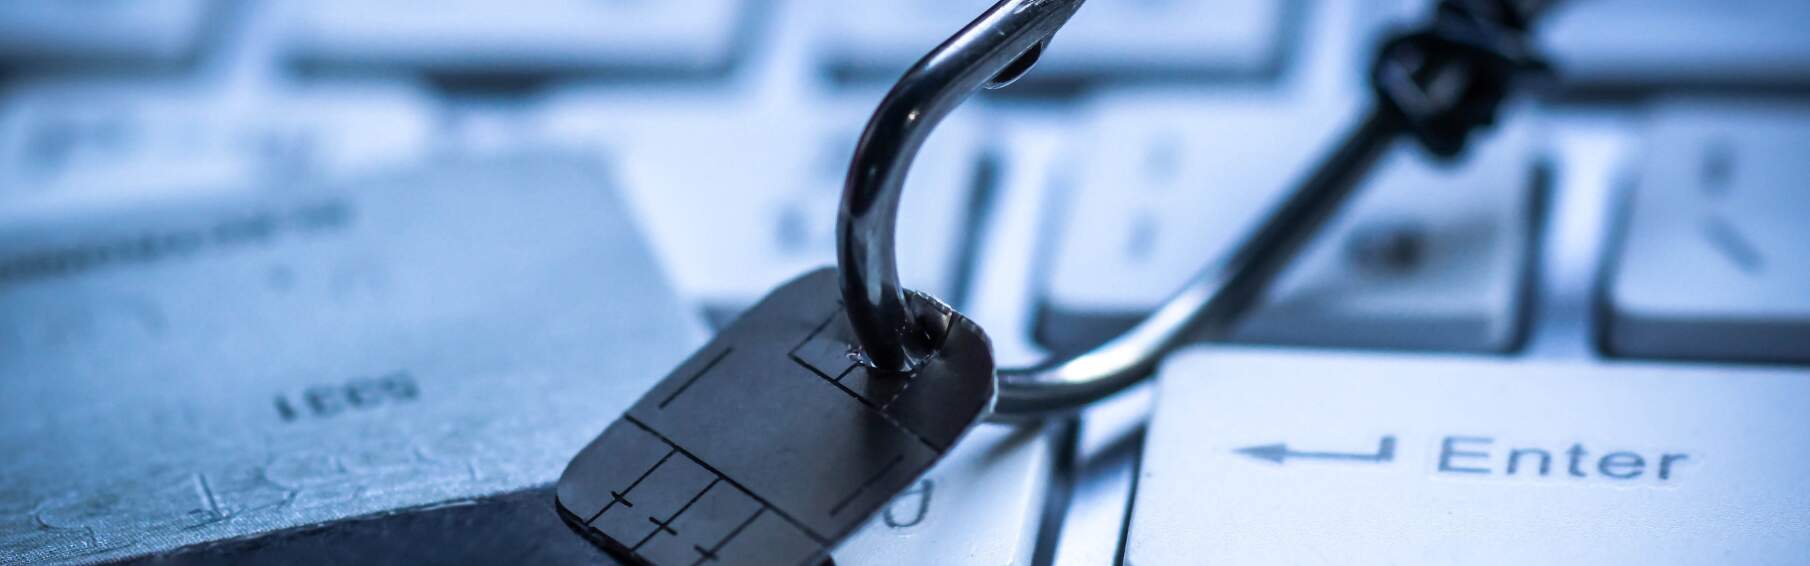 Jak poznat phishing